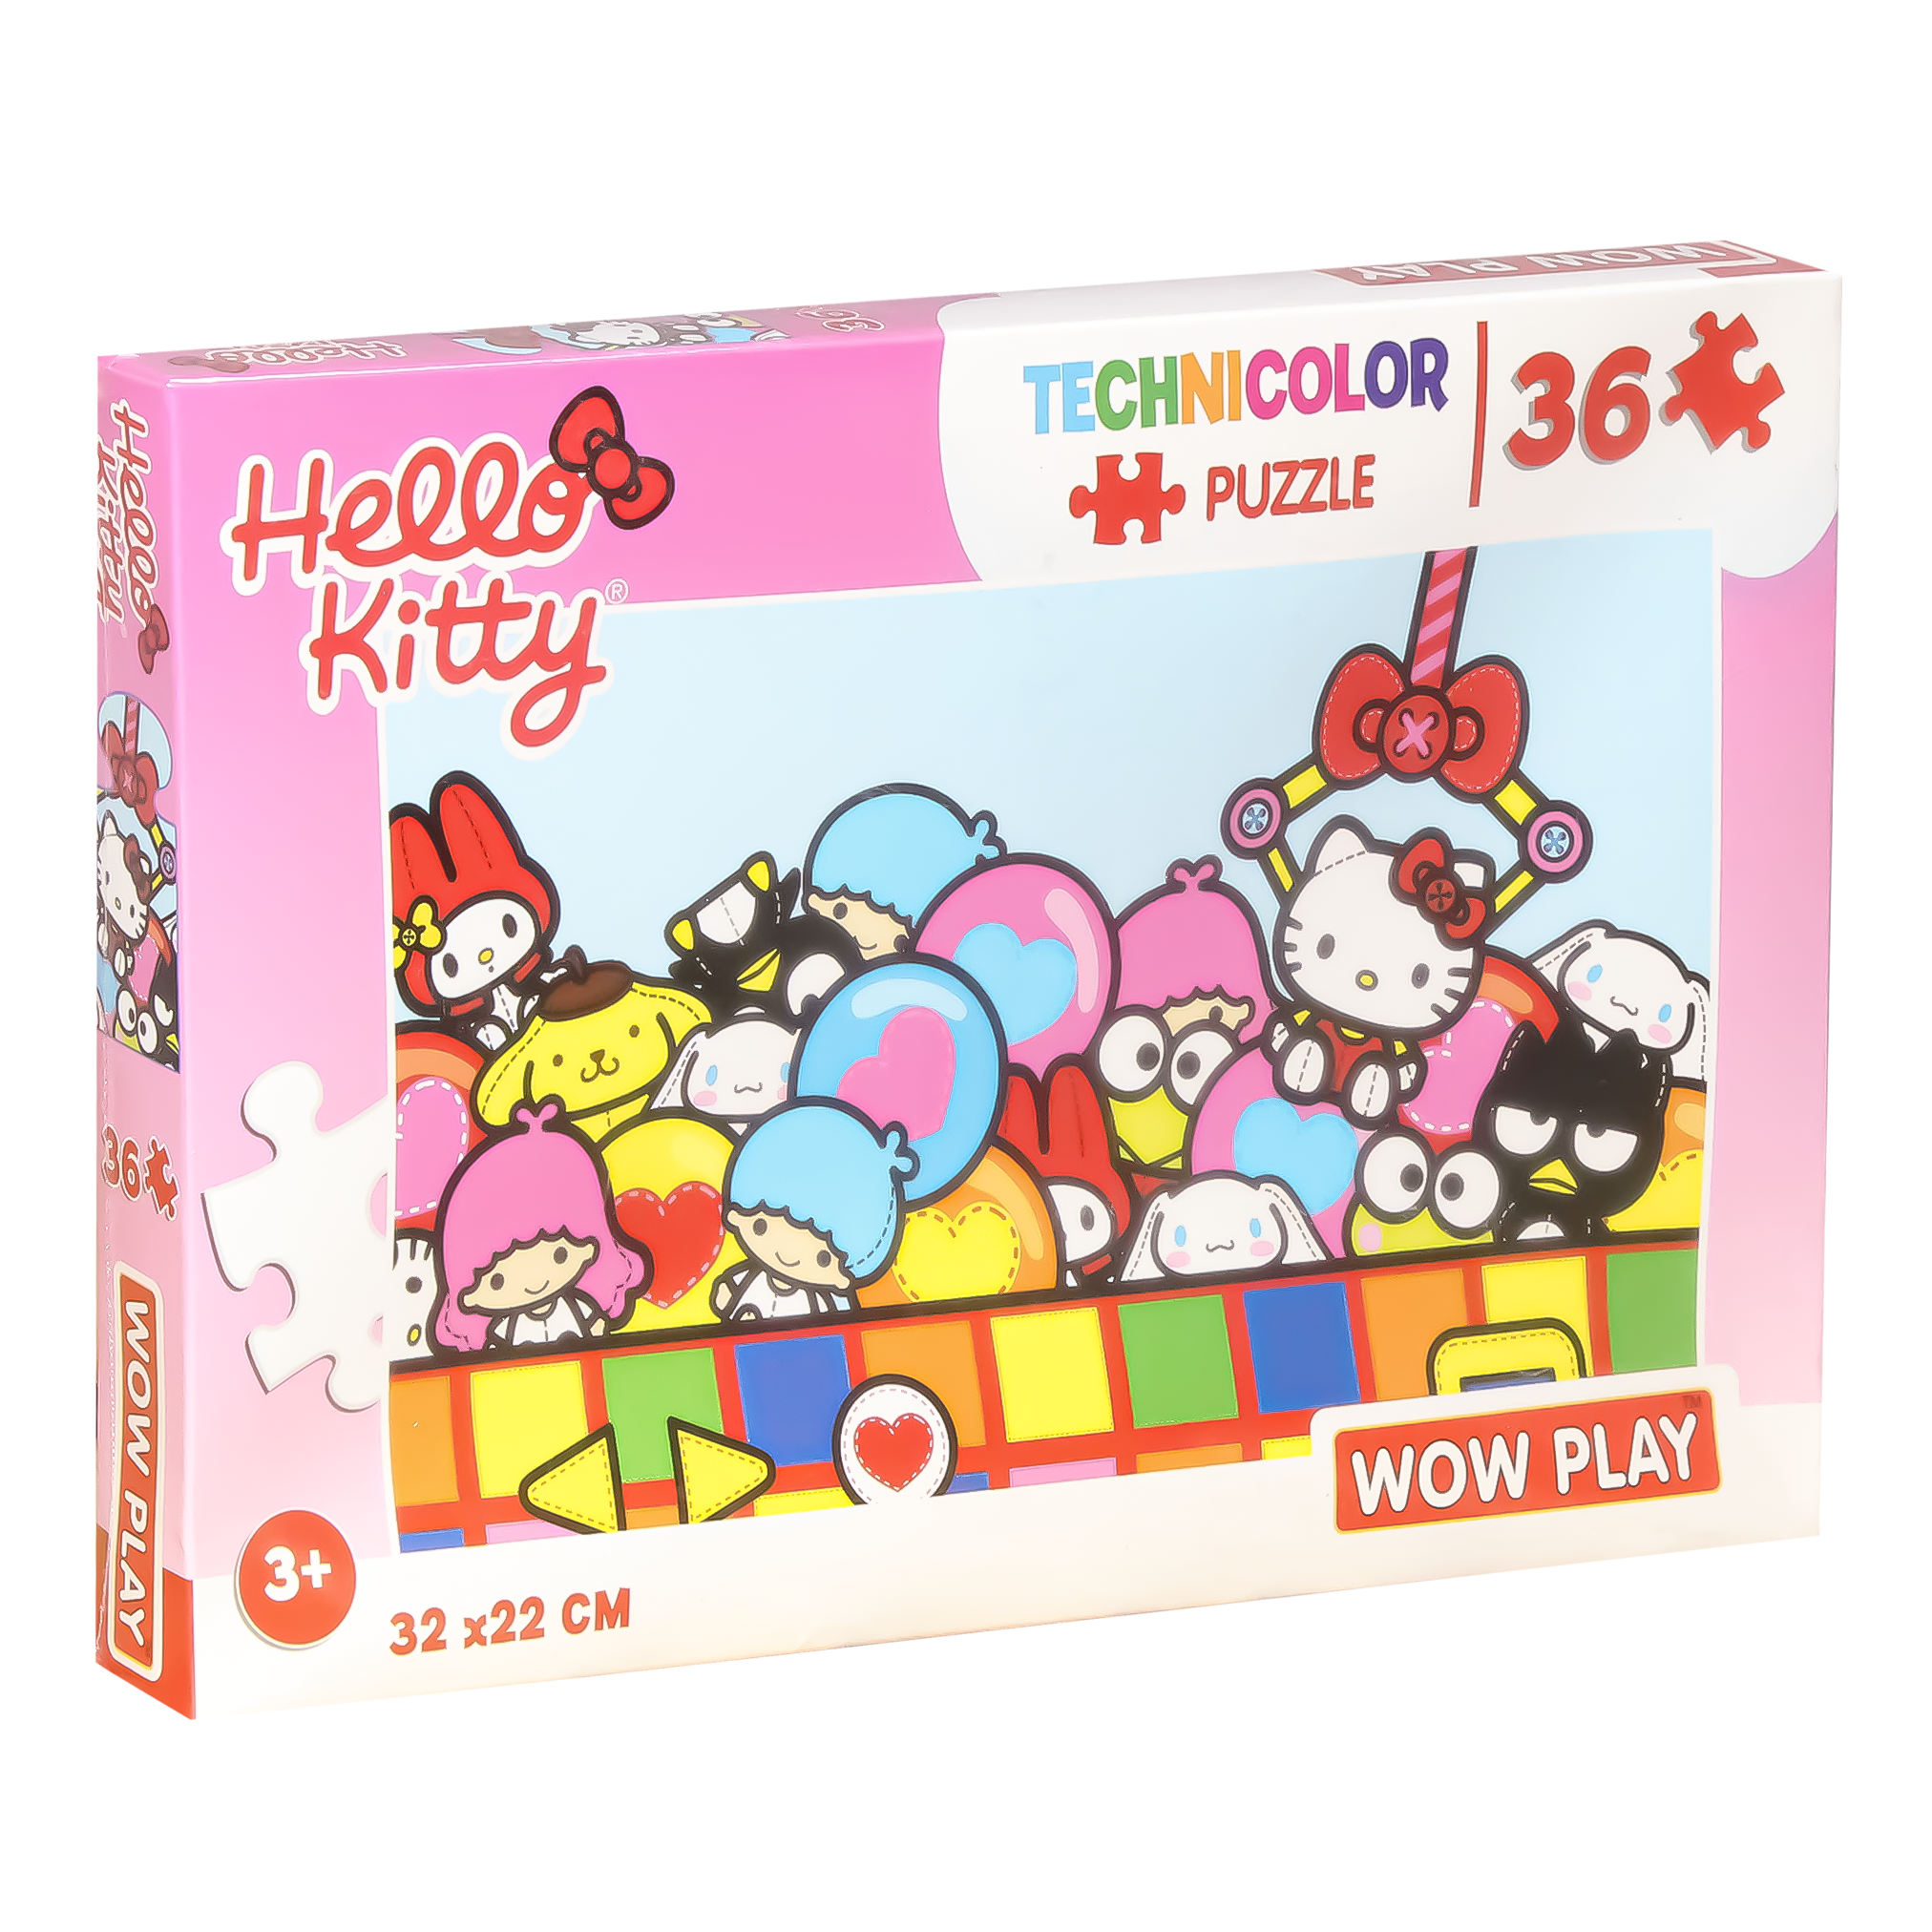 Wow Play Technicolour Puzzle 36 pieces 